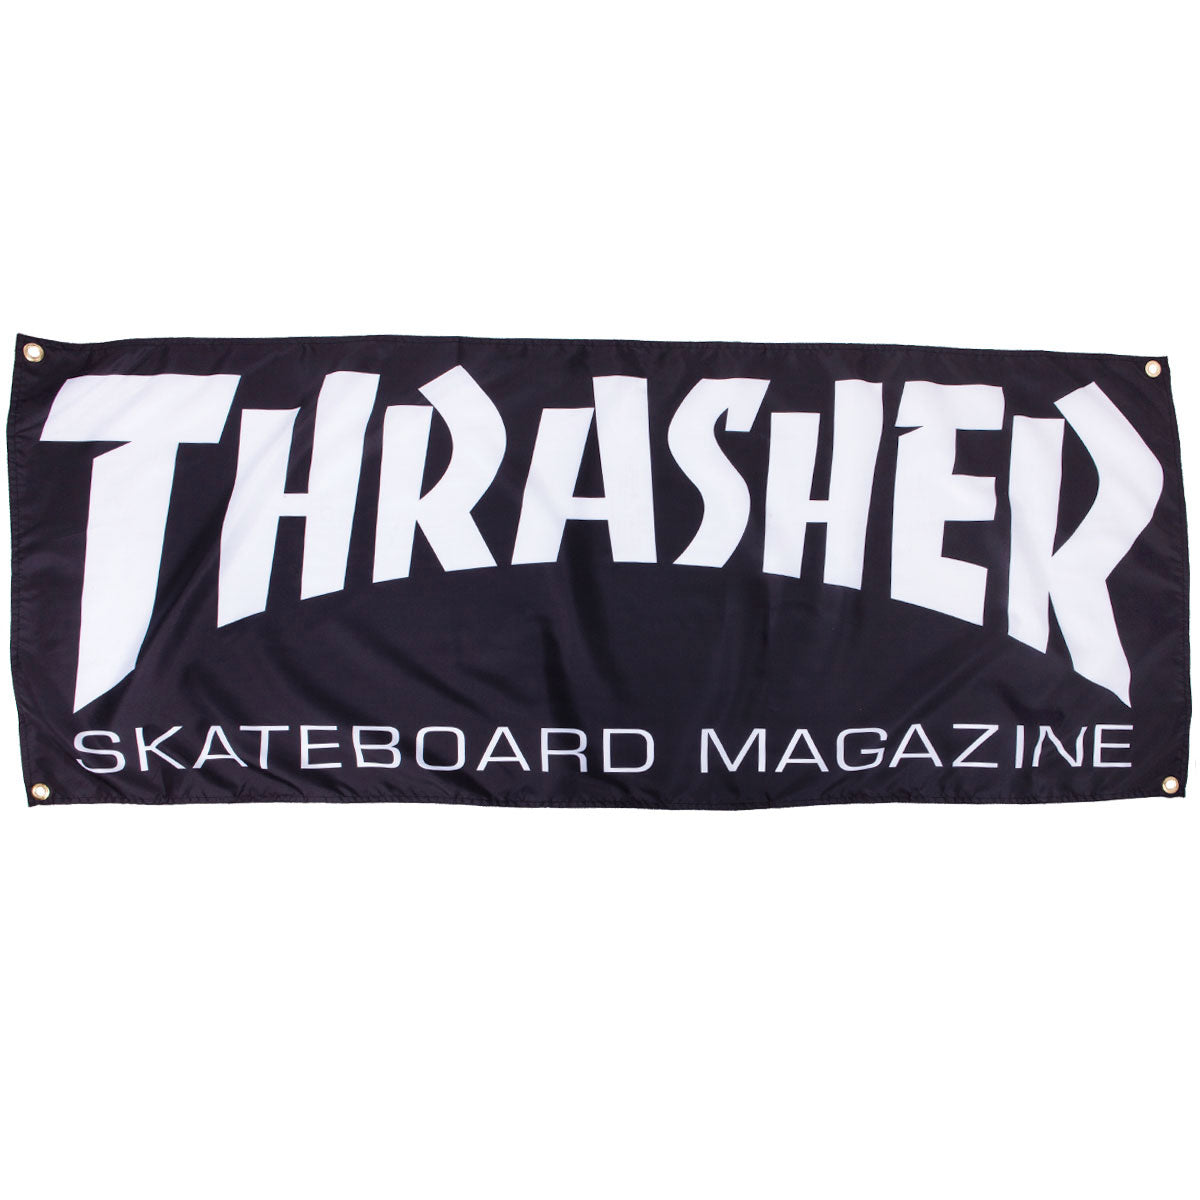 Thrasher Skate Mag Banner (cloth) - Black image 1